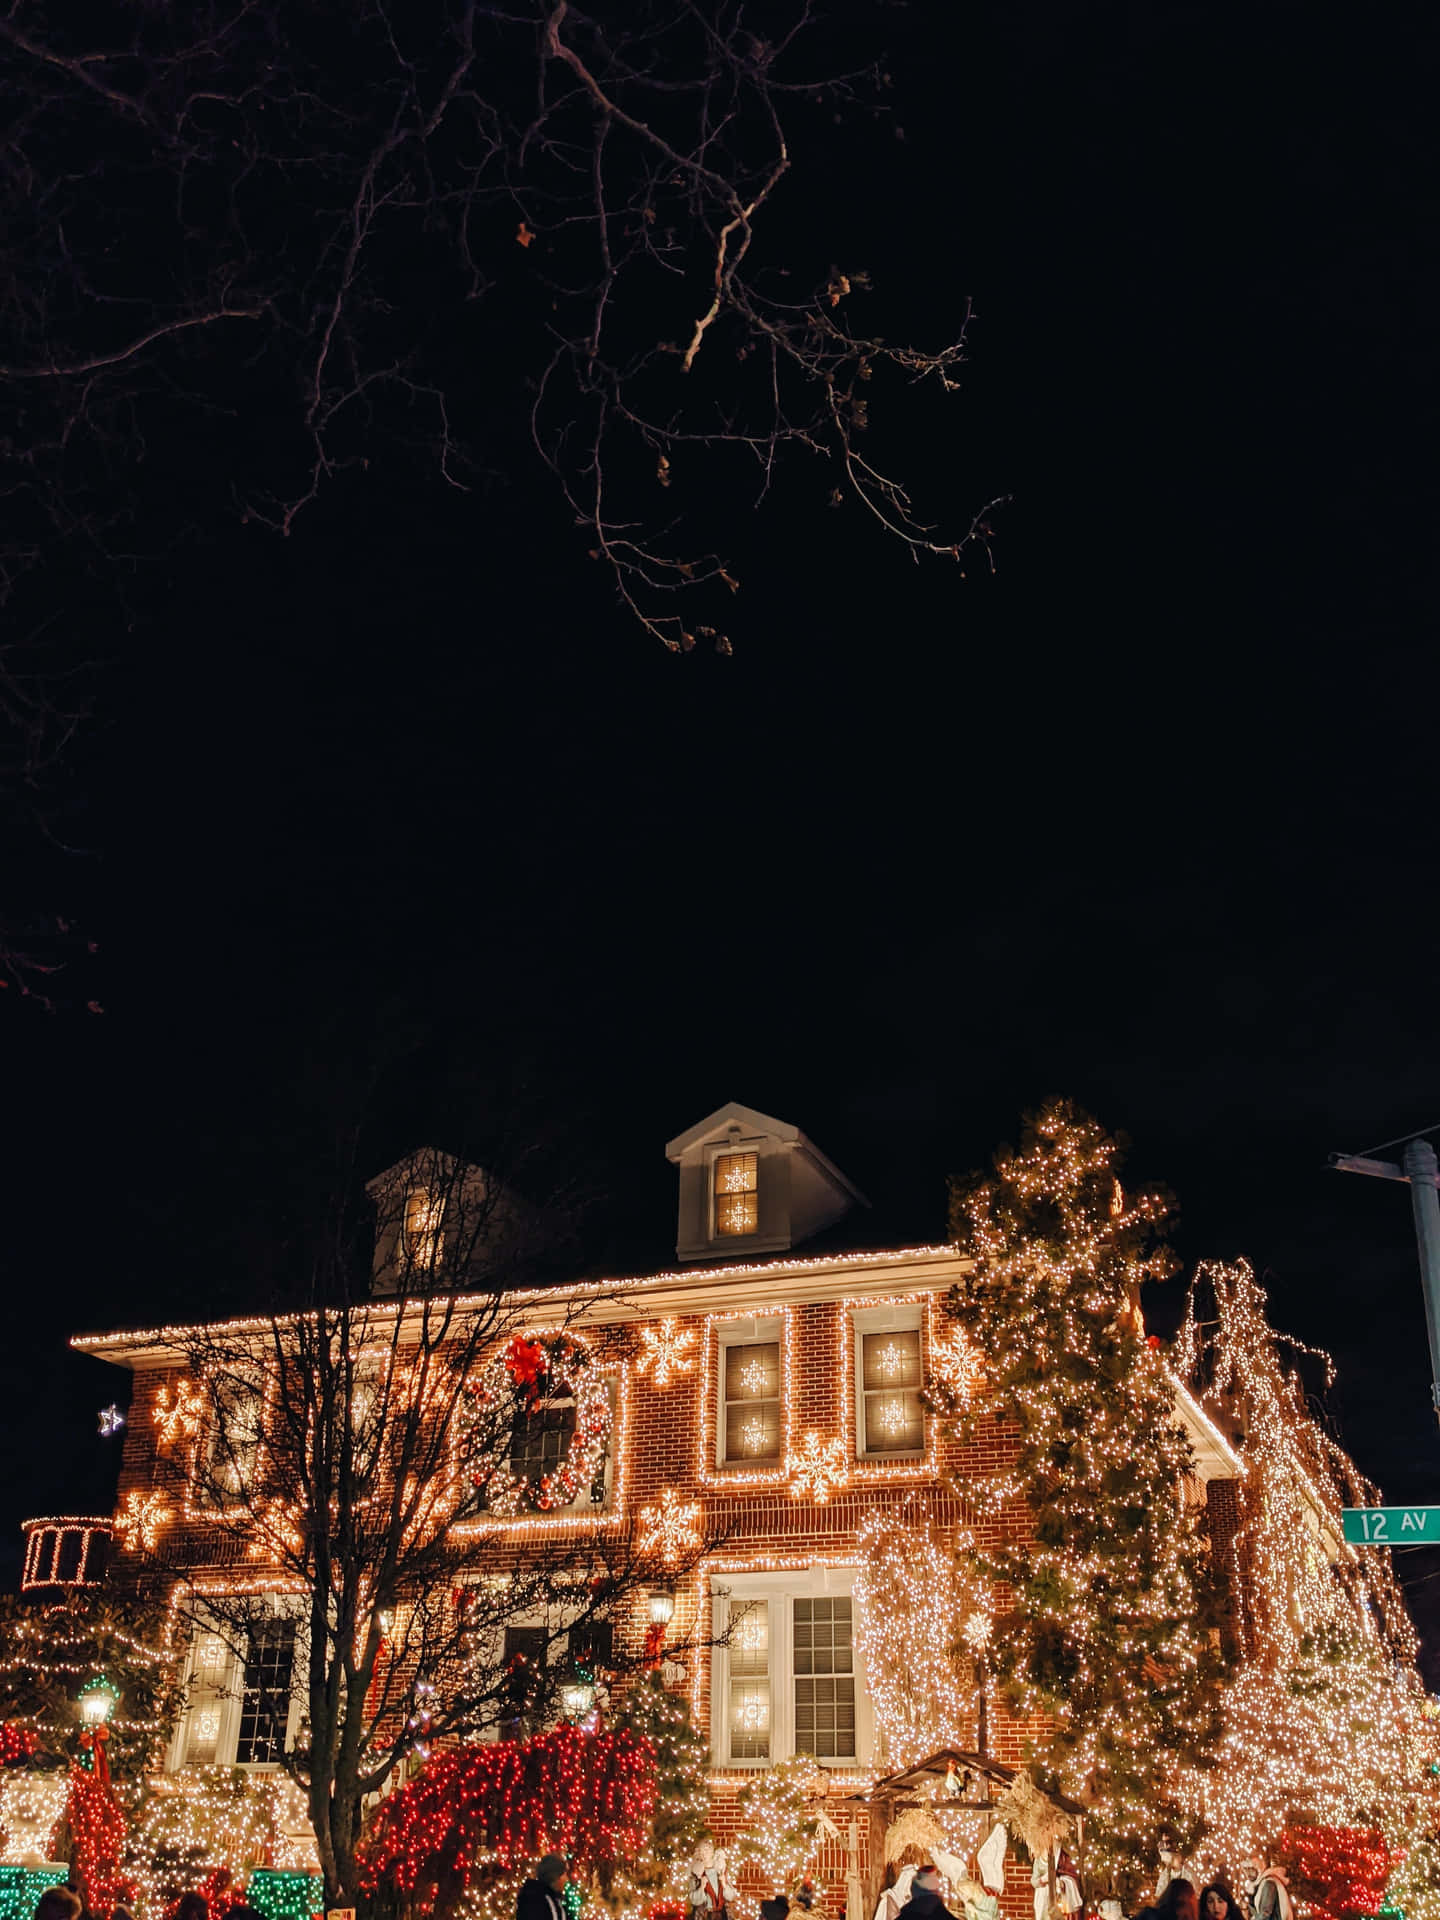 Celebrating the holiday season with beautiful Christmas lights